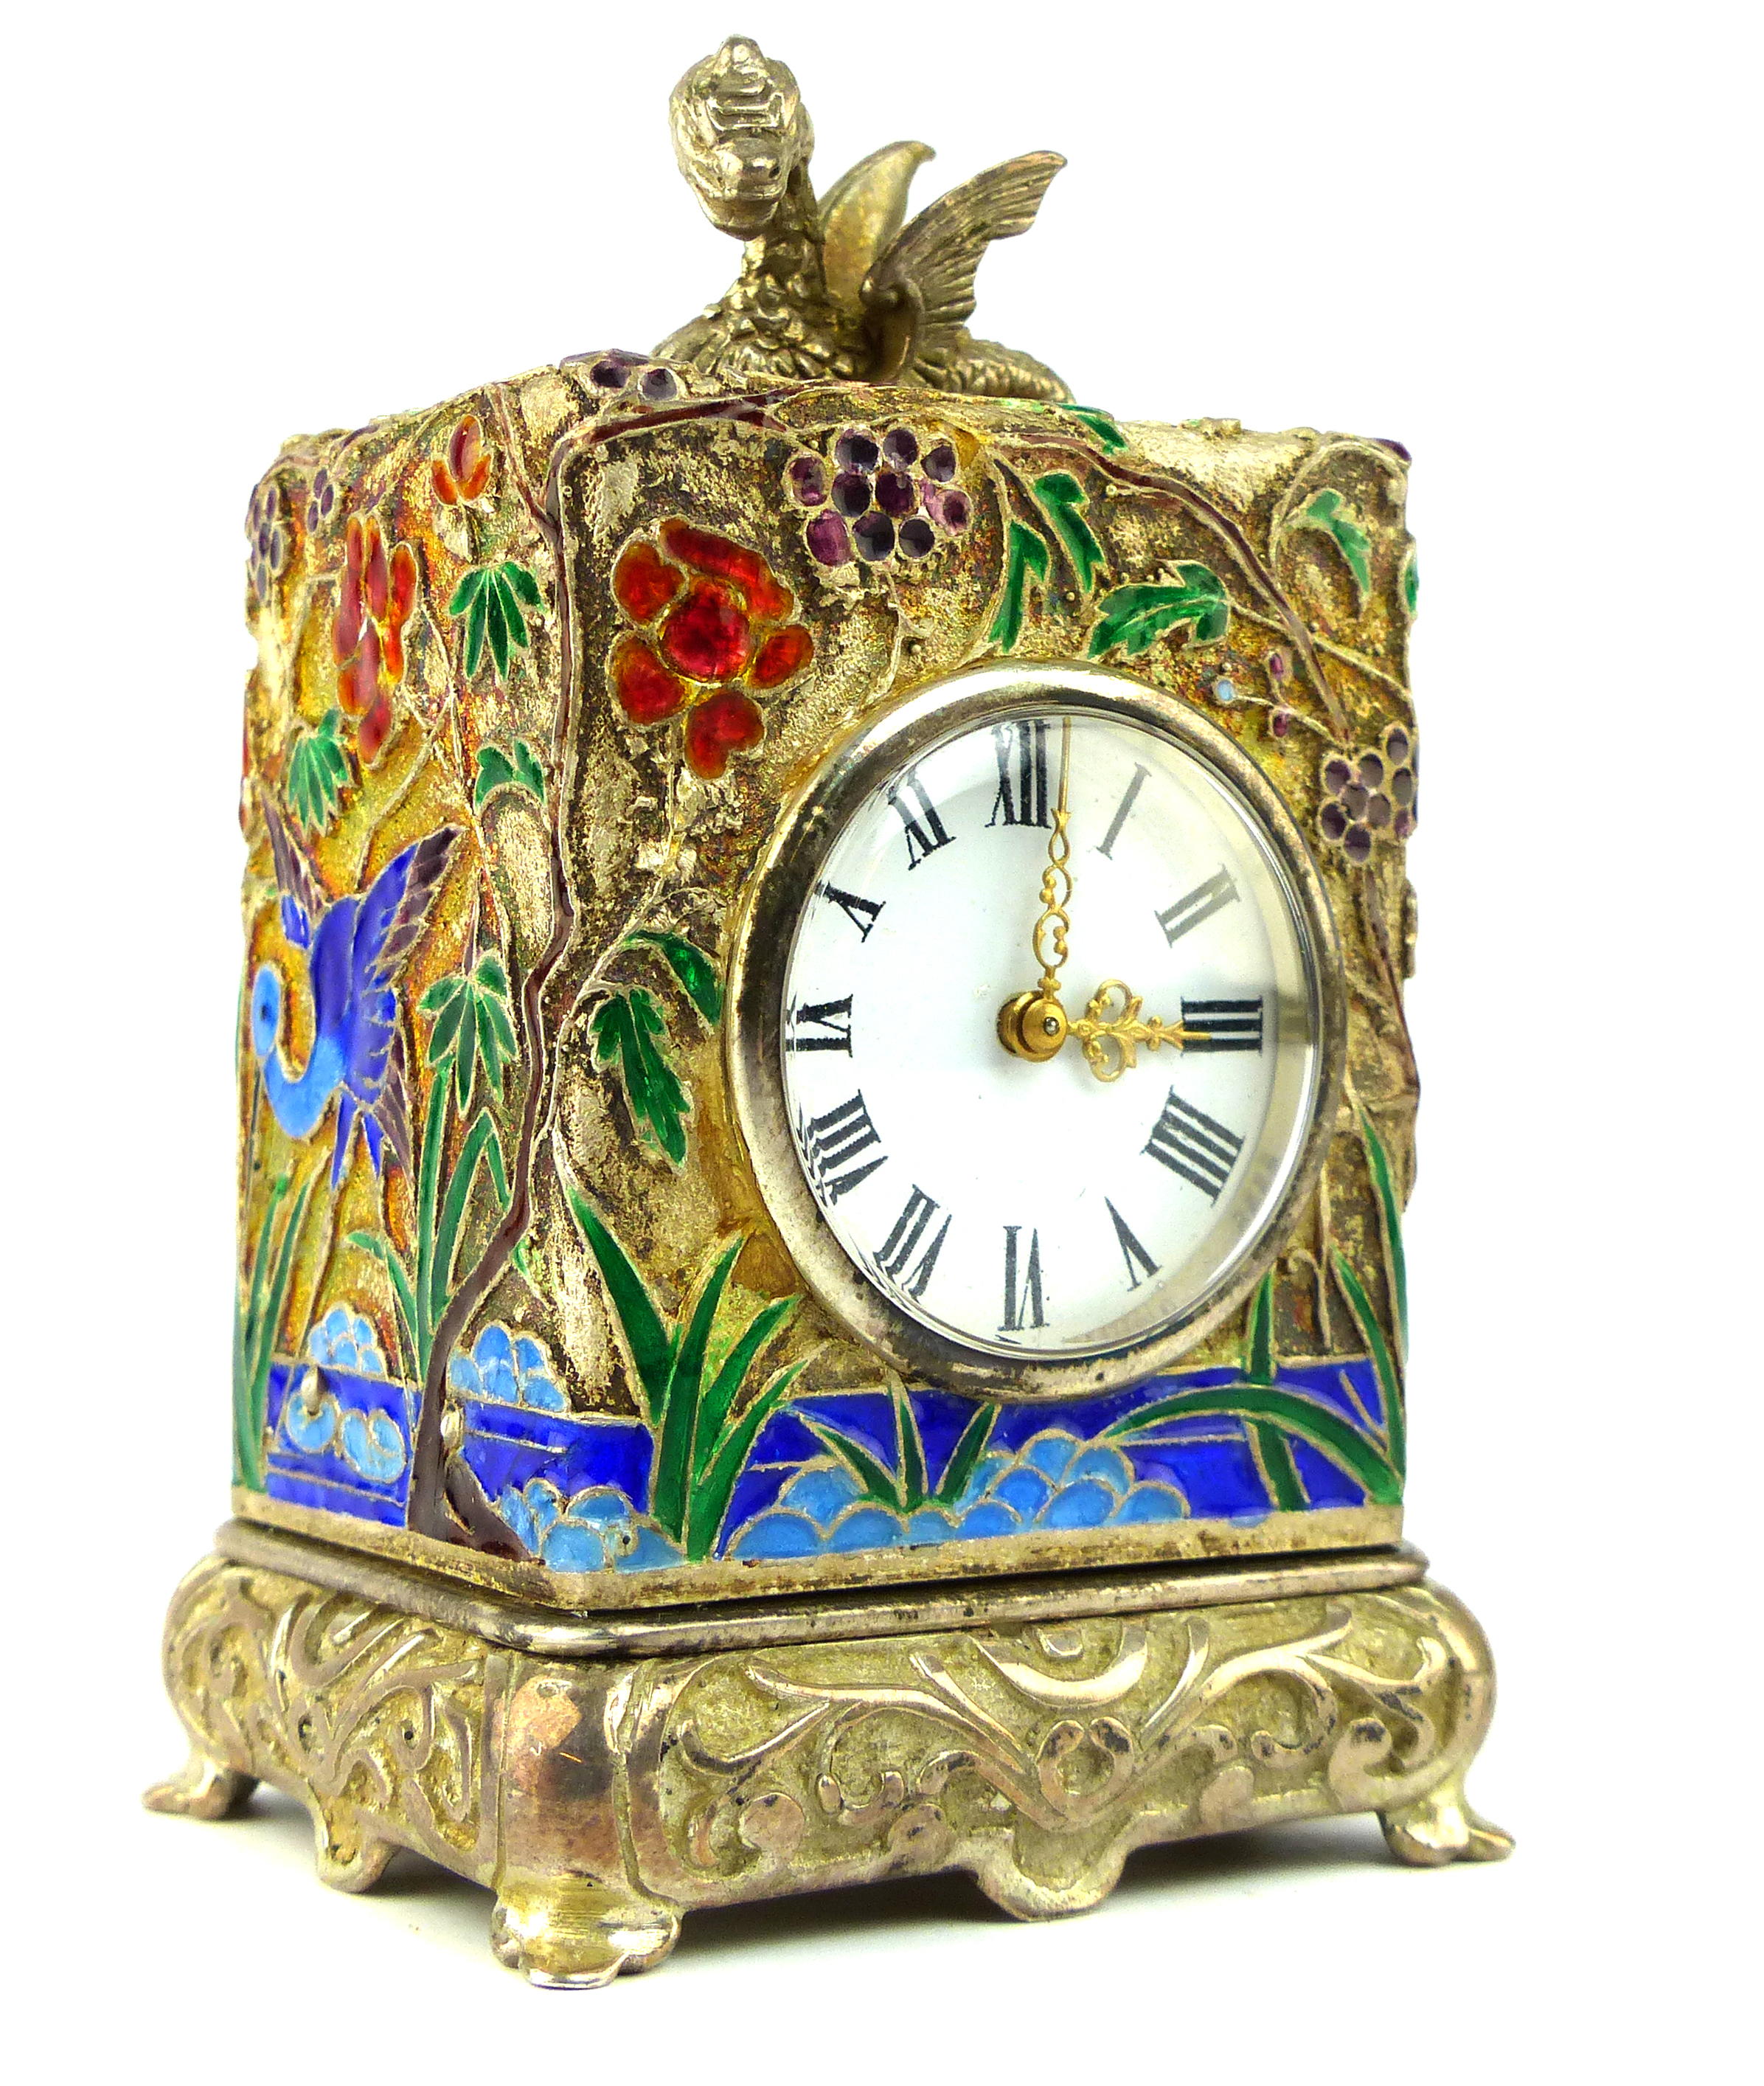 Miniature Silver & Enamel carriage clock of rectangular form,